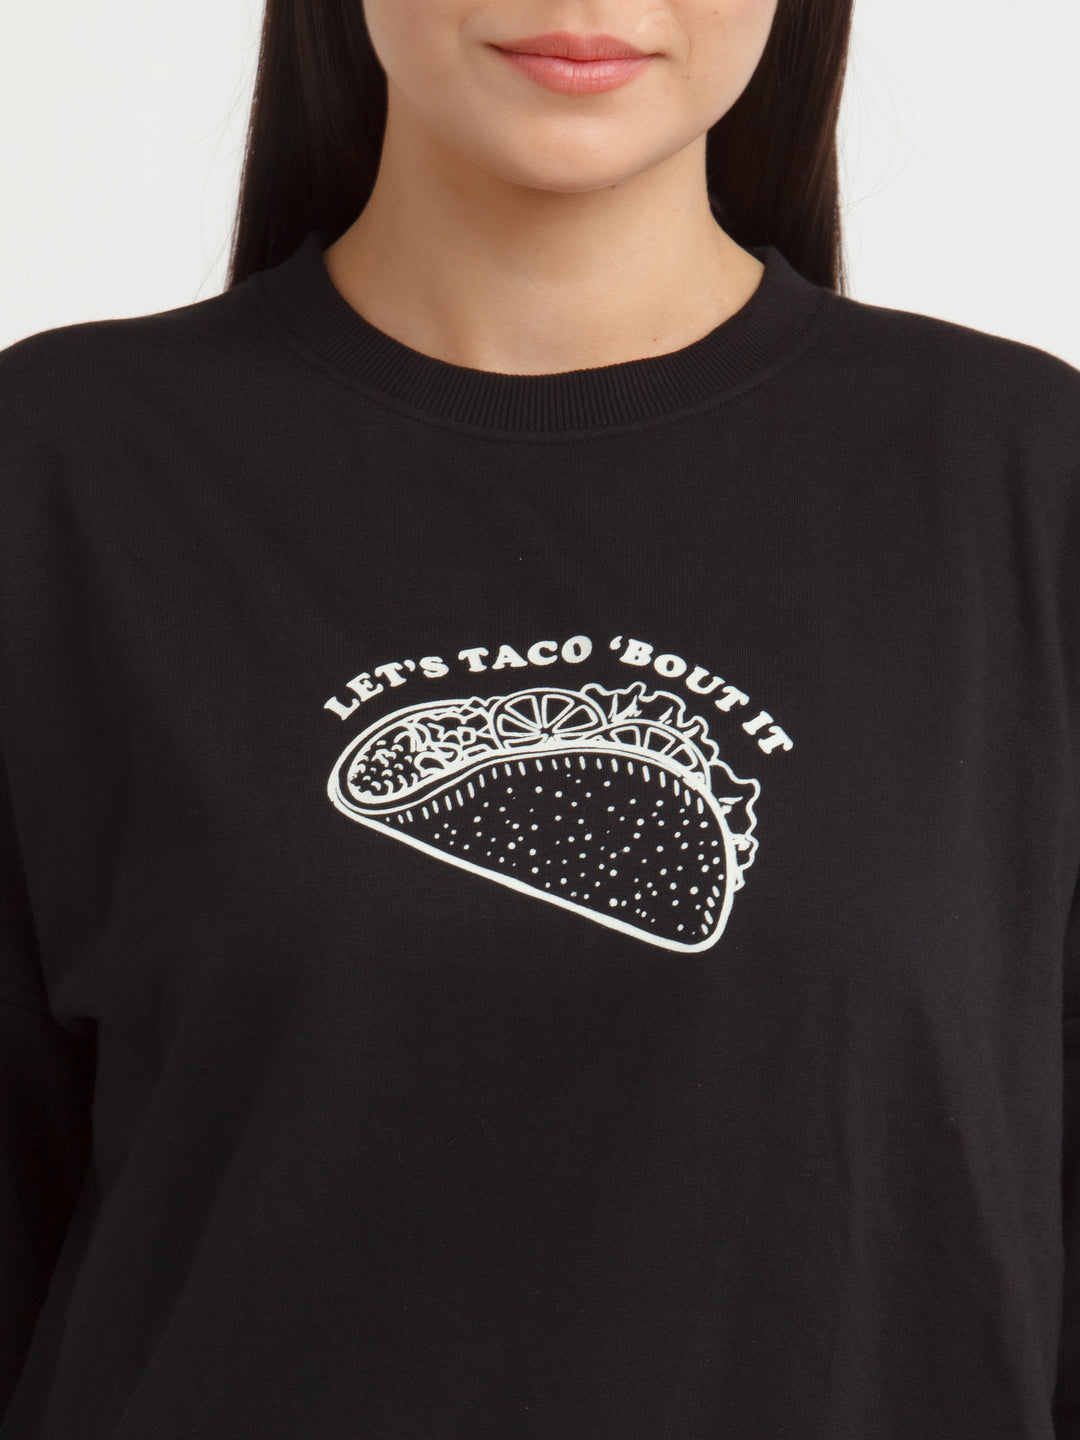 Black Printed Sweatshirt For Women